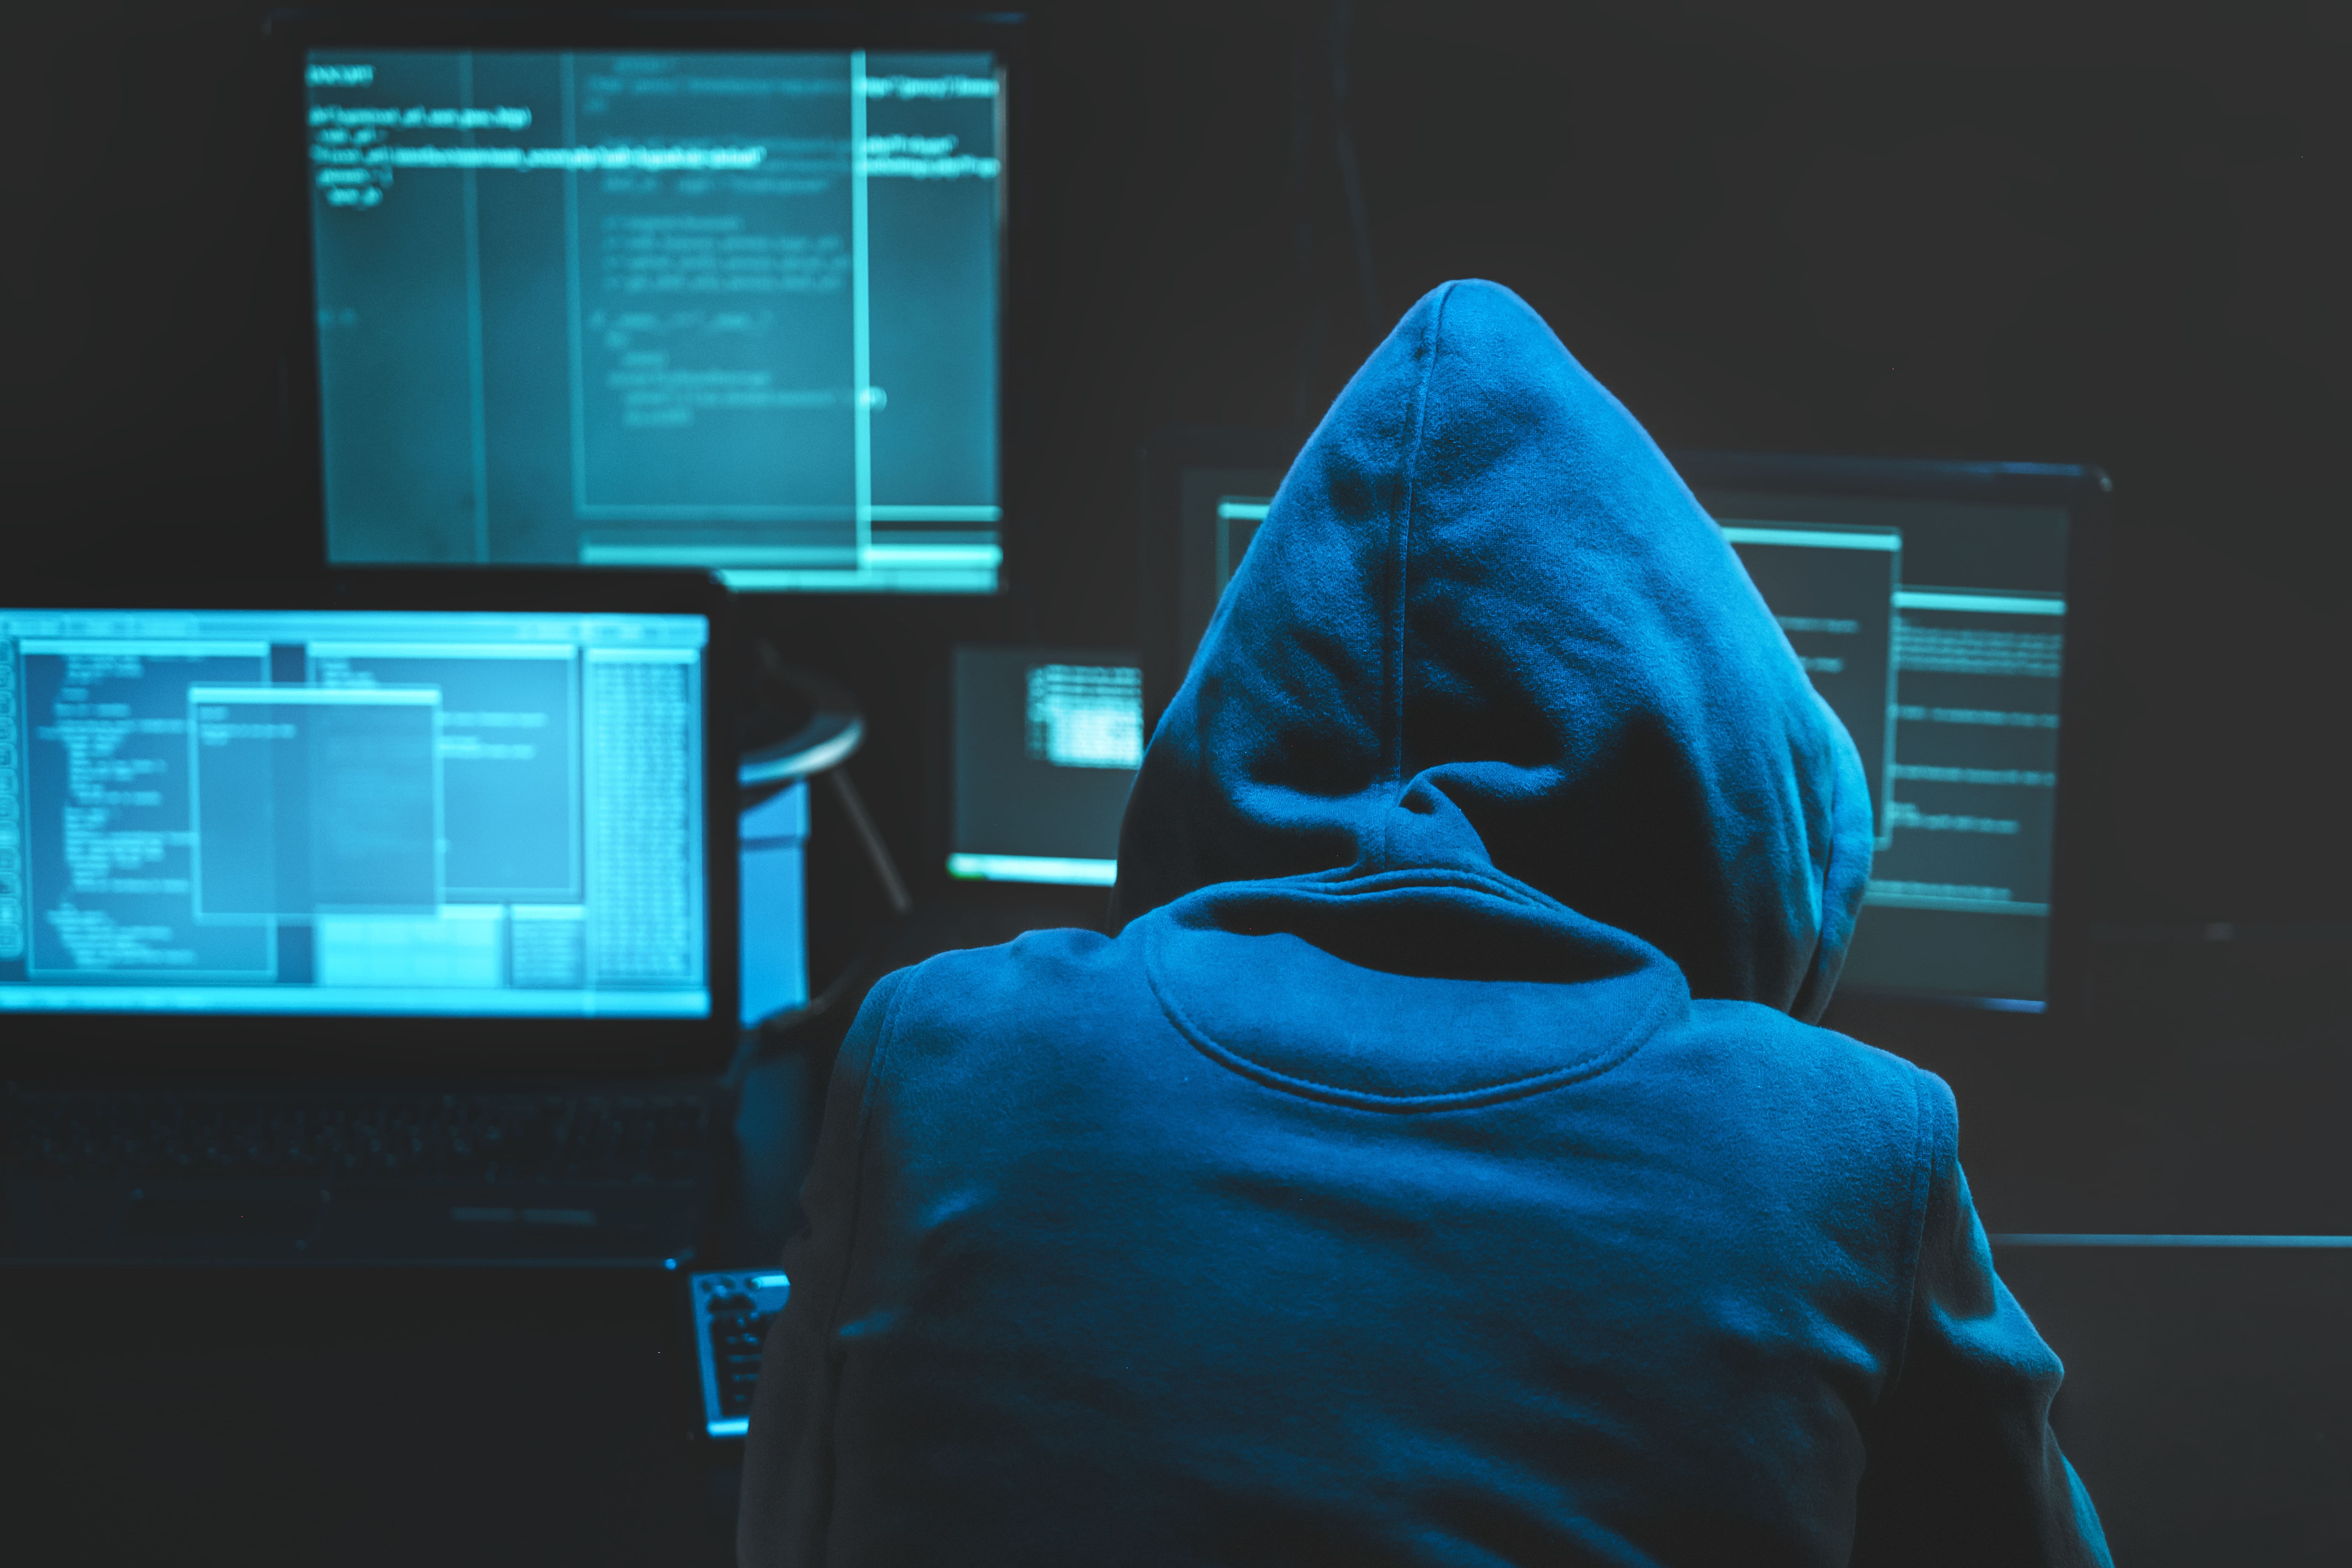 hacker using computer for organizing massive data breach attack on goverment servers hacker in dark 2 1